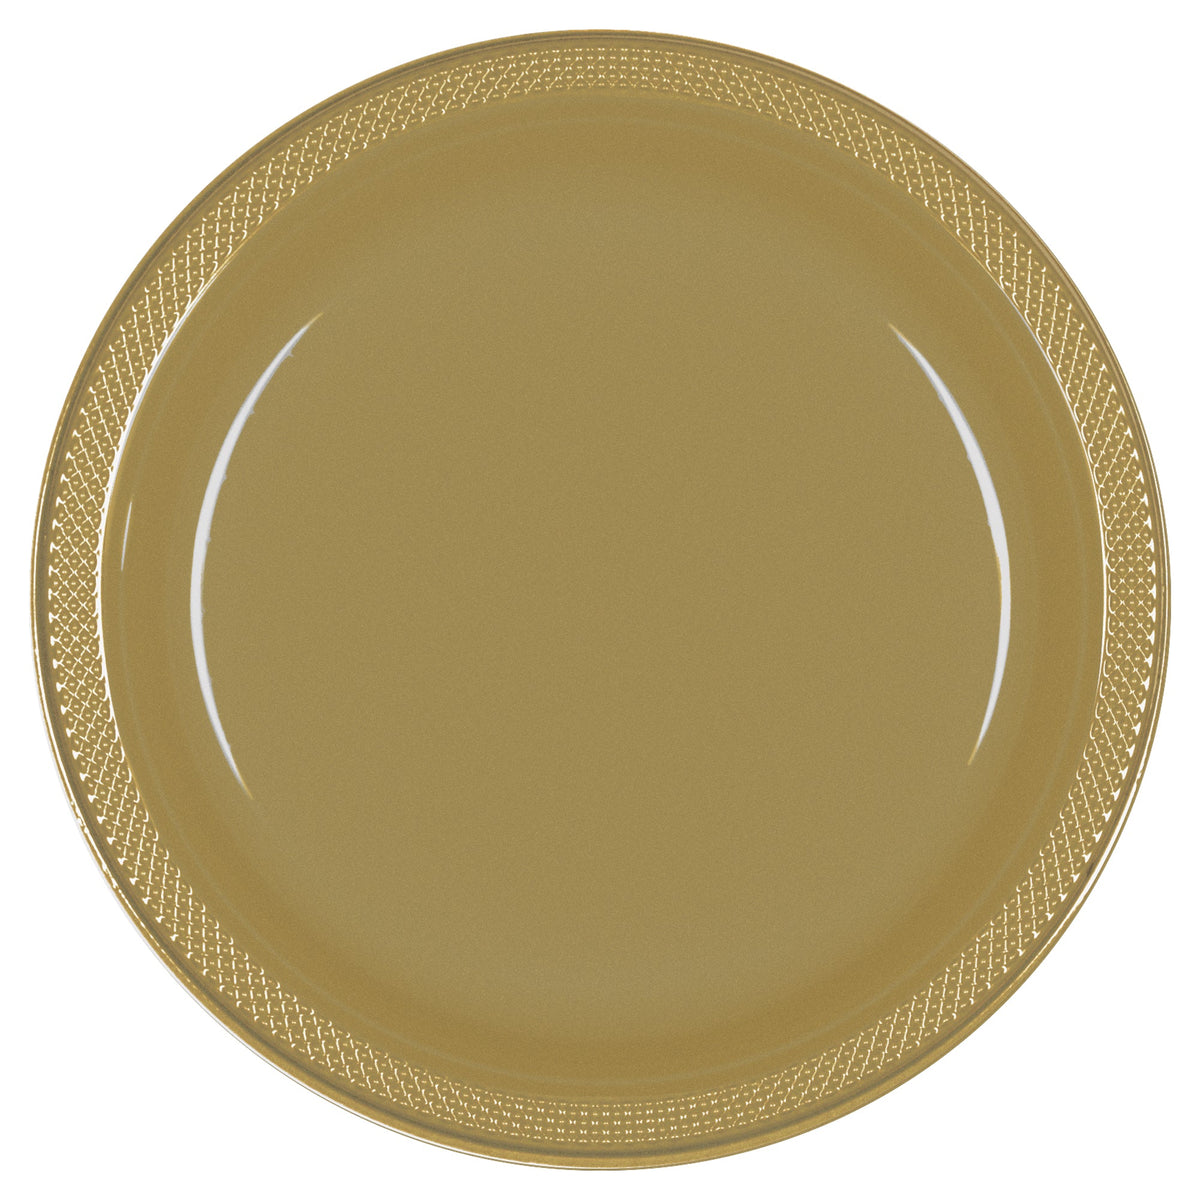 Gold 10" Round Plastic Plates, 20 count